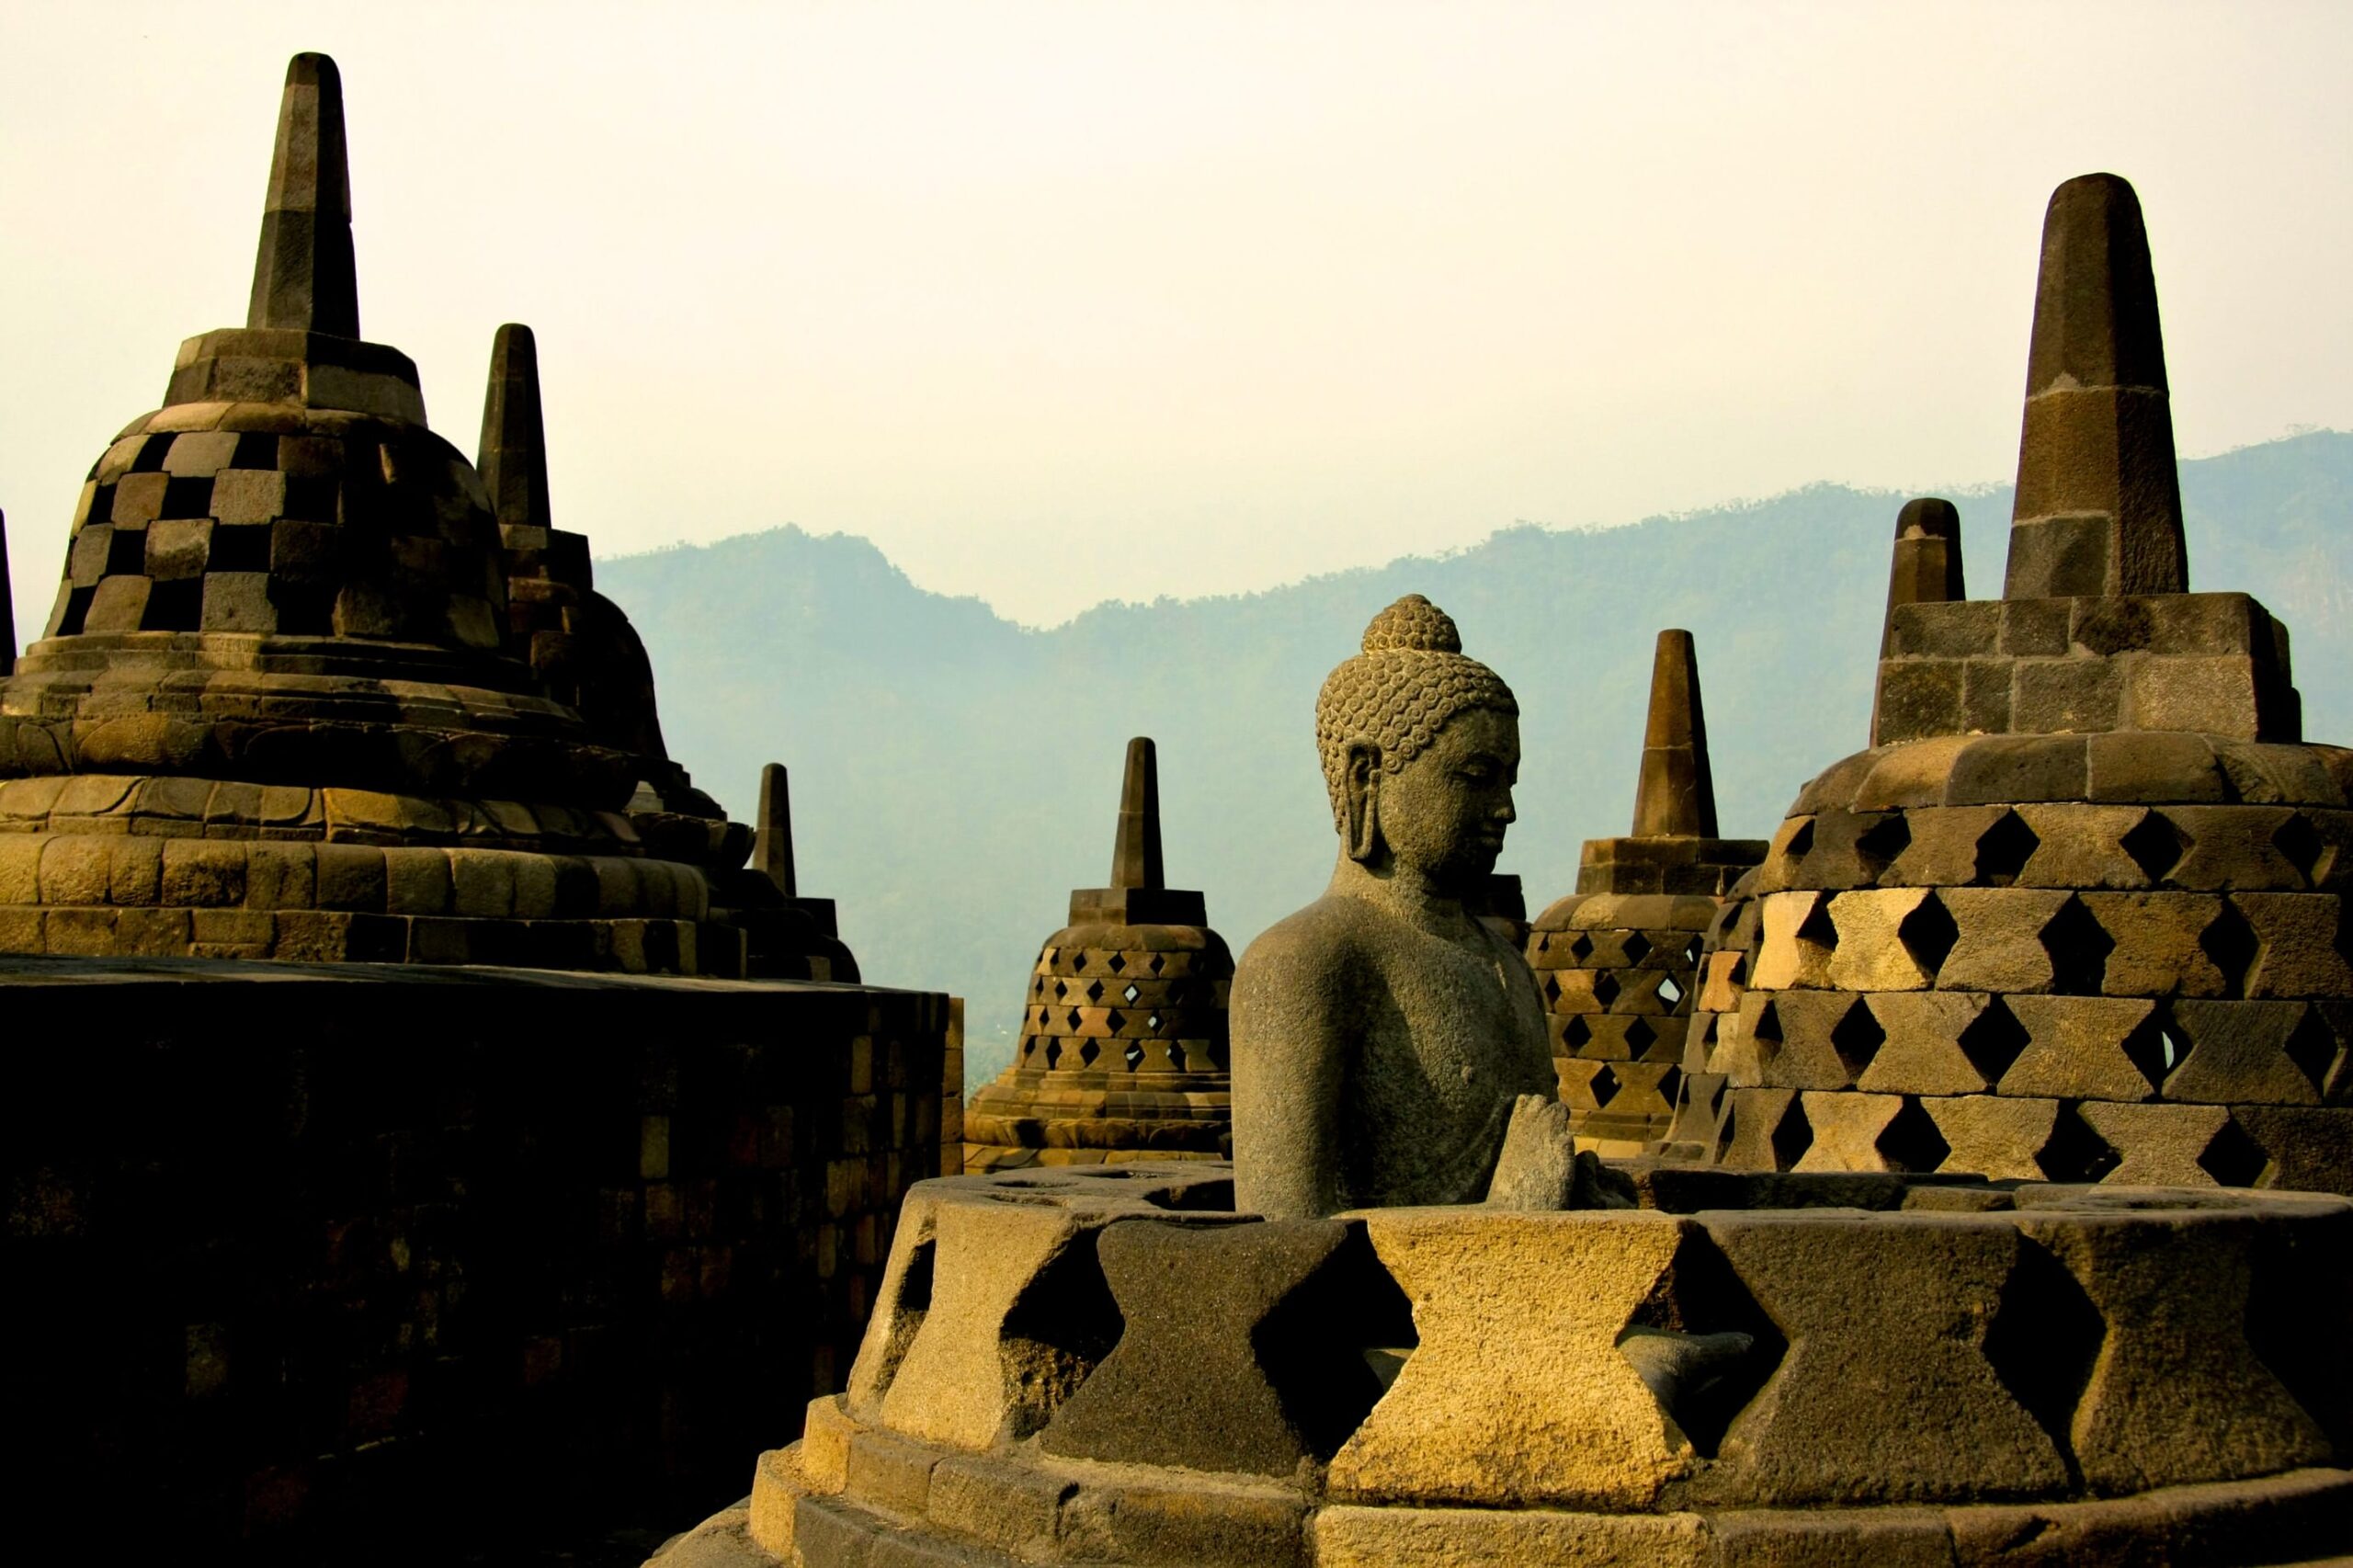 Borobudur, Magelang, Central Java, Indonesia